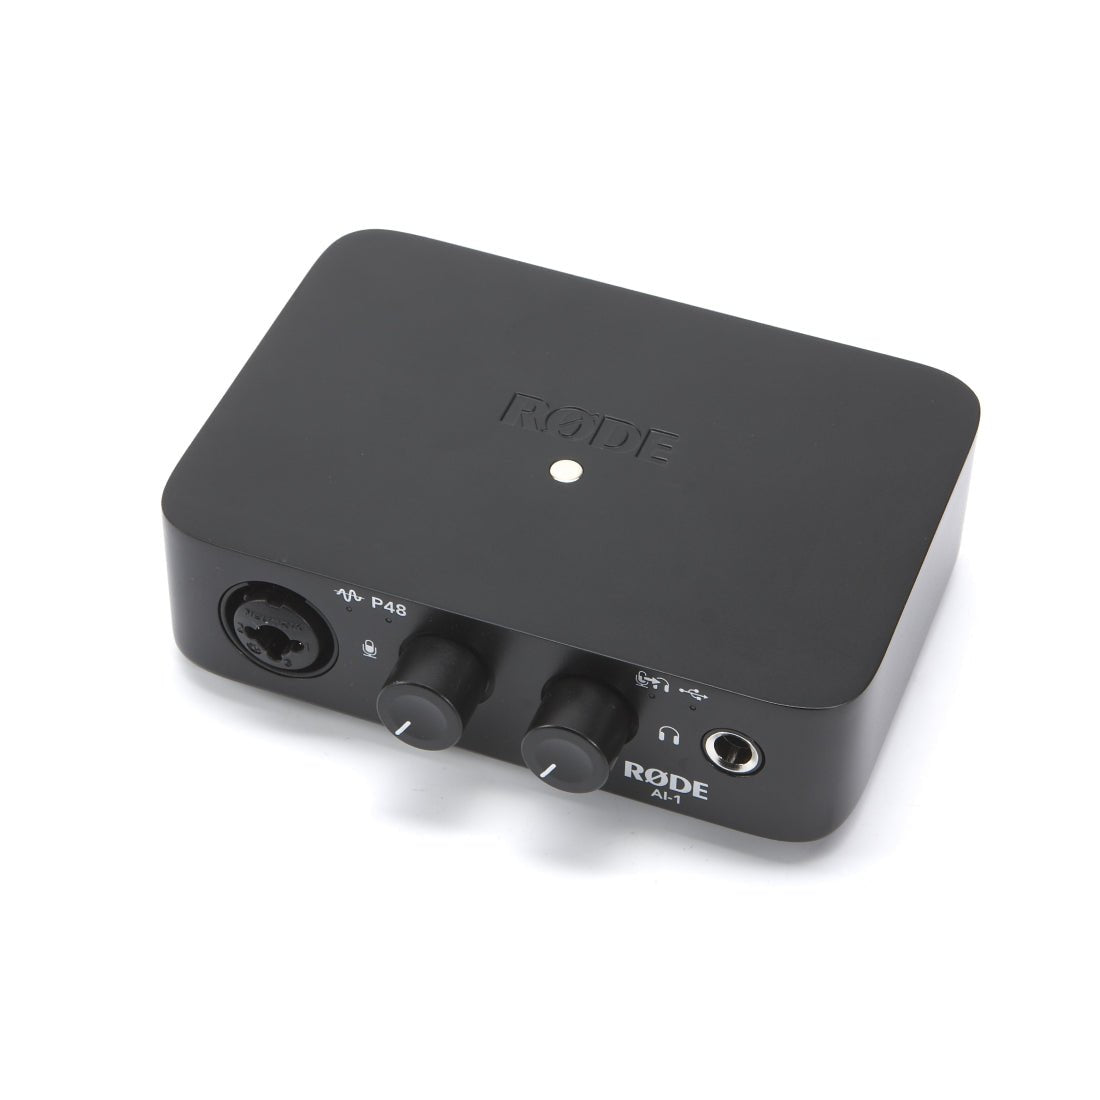 RØDE NT1 & AI-1 Complete Studio Kit w/ Audio Interface - ميكروفون - Store 974 | ستور ٩٧٤